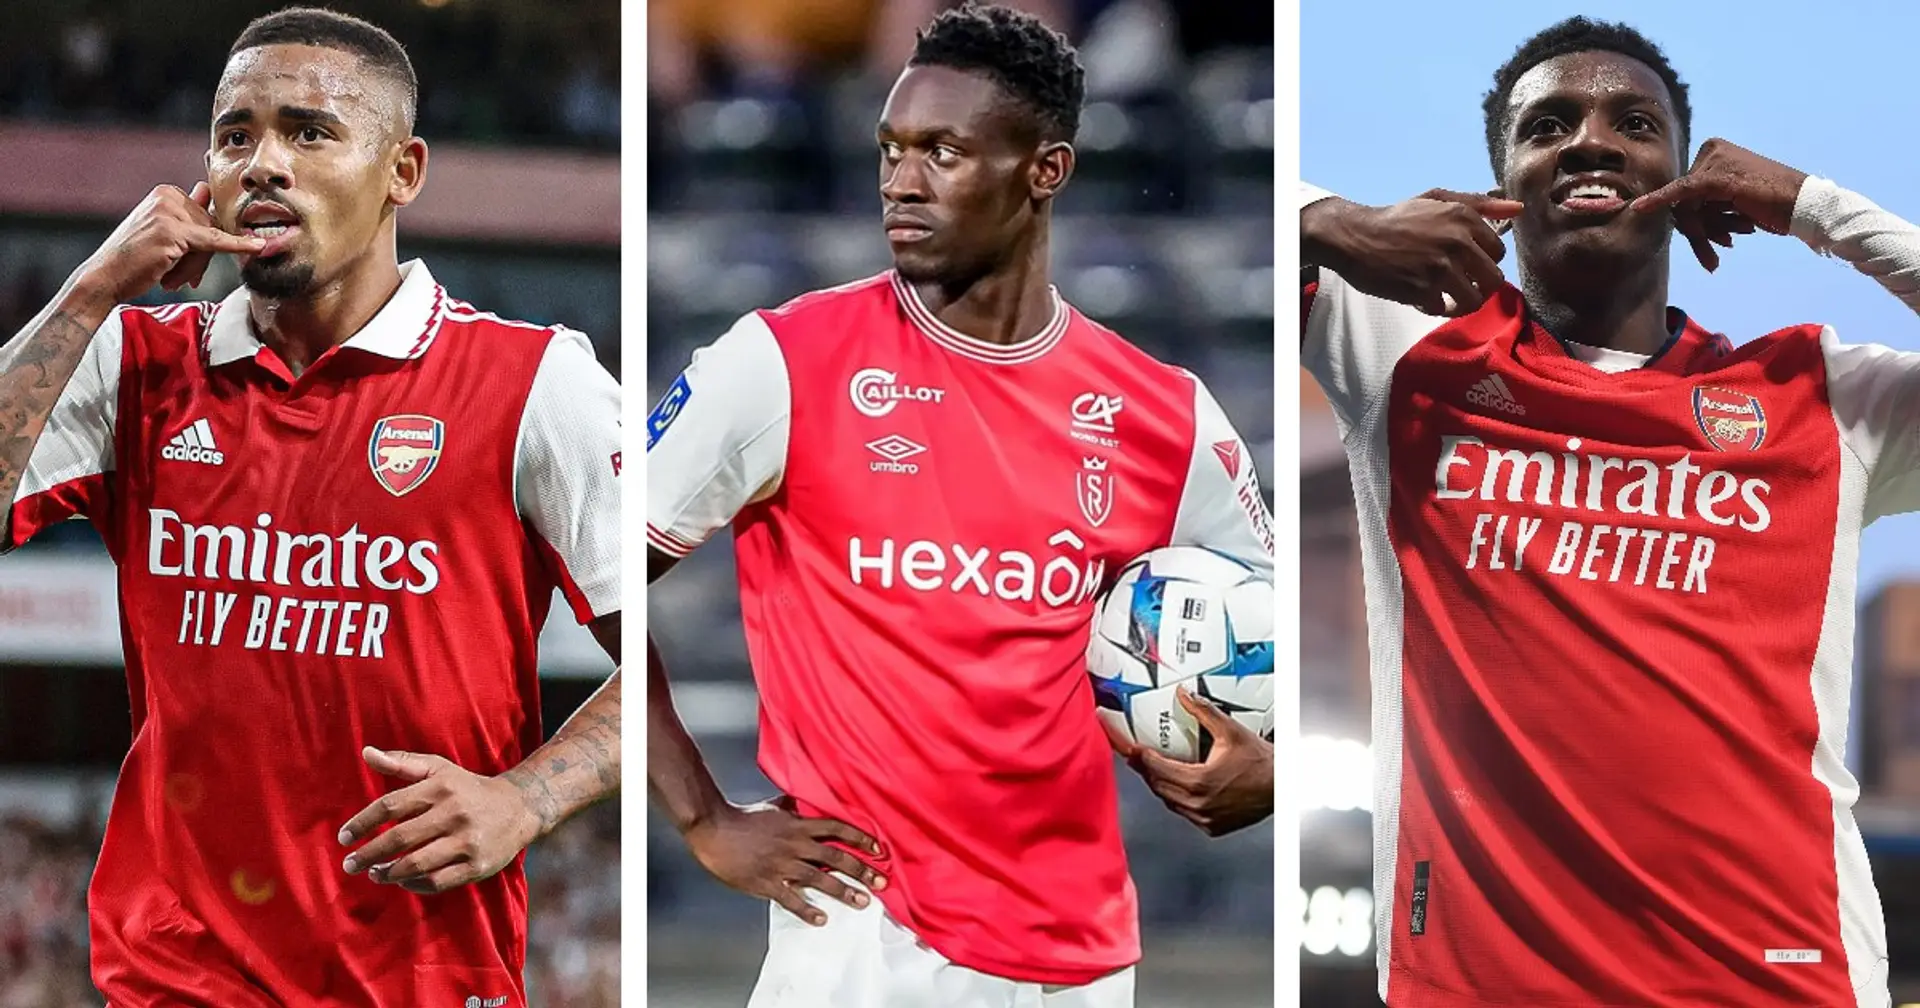 Who should lead the line for Arsenal next season - Jesus, Balogun or Nketiah?